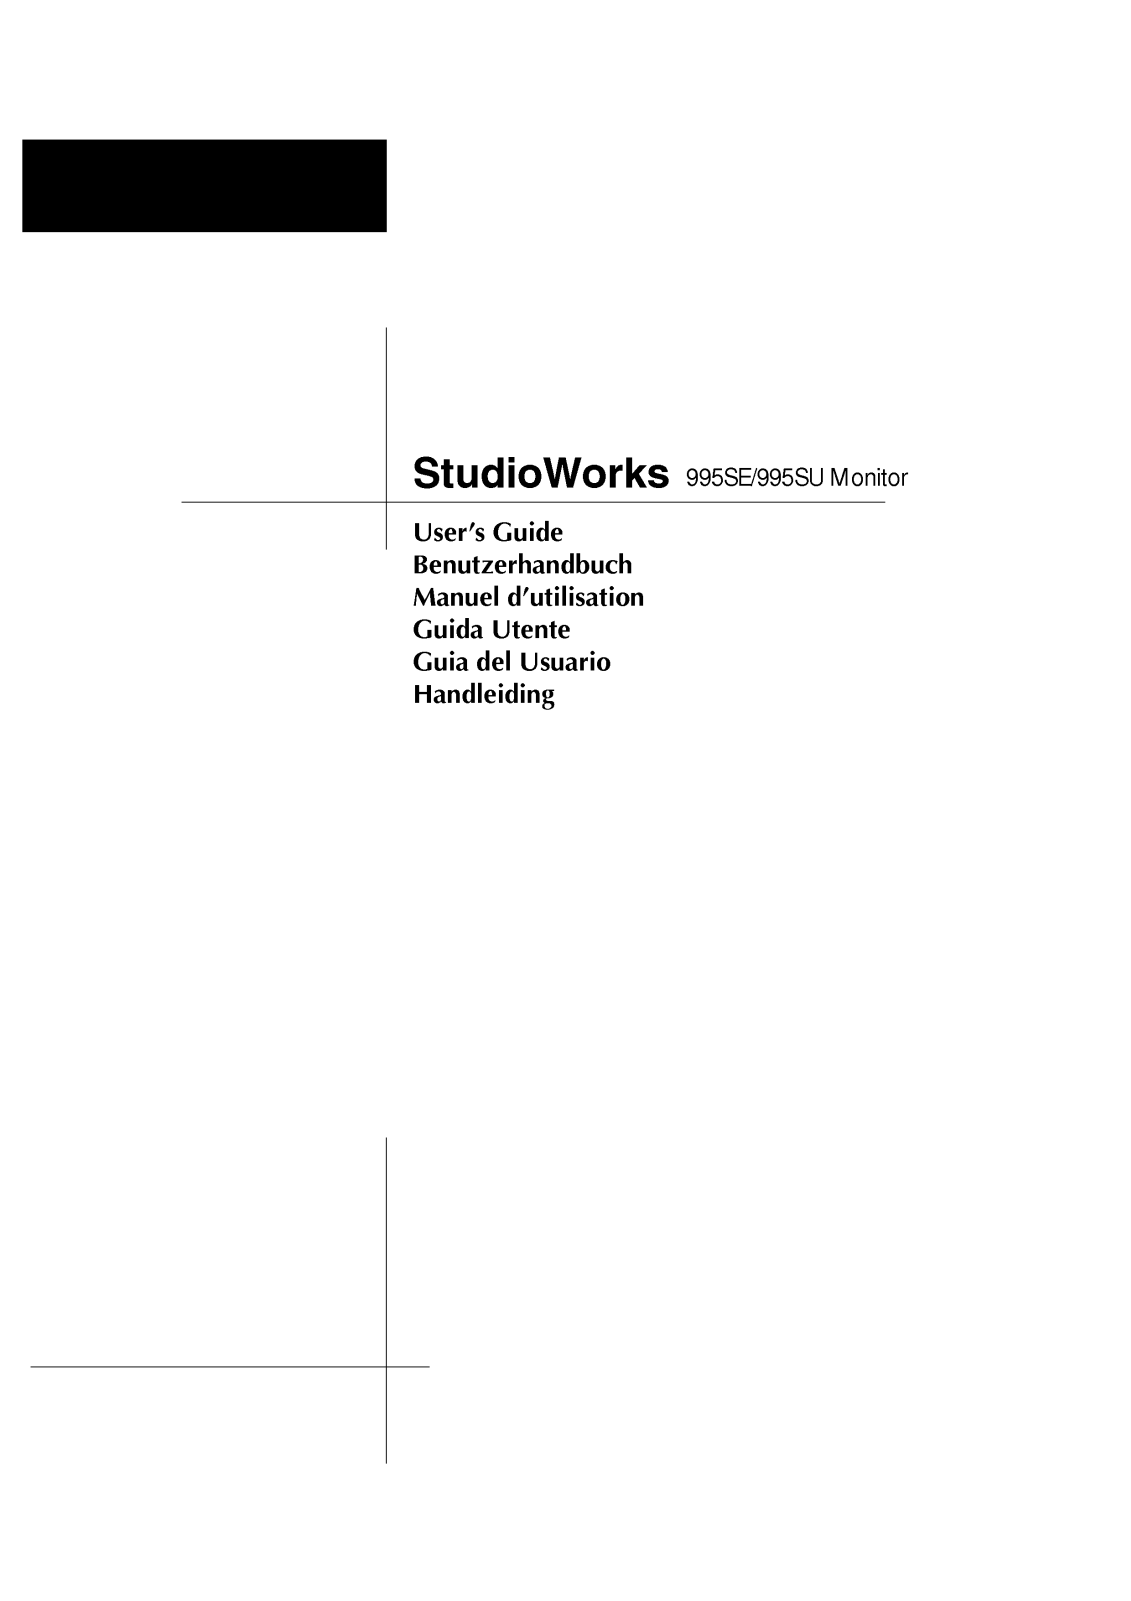 LG STUDIOWORKS 995SU-SB995CP User Manual